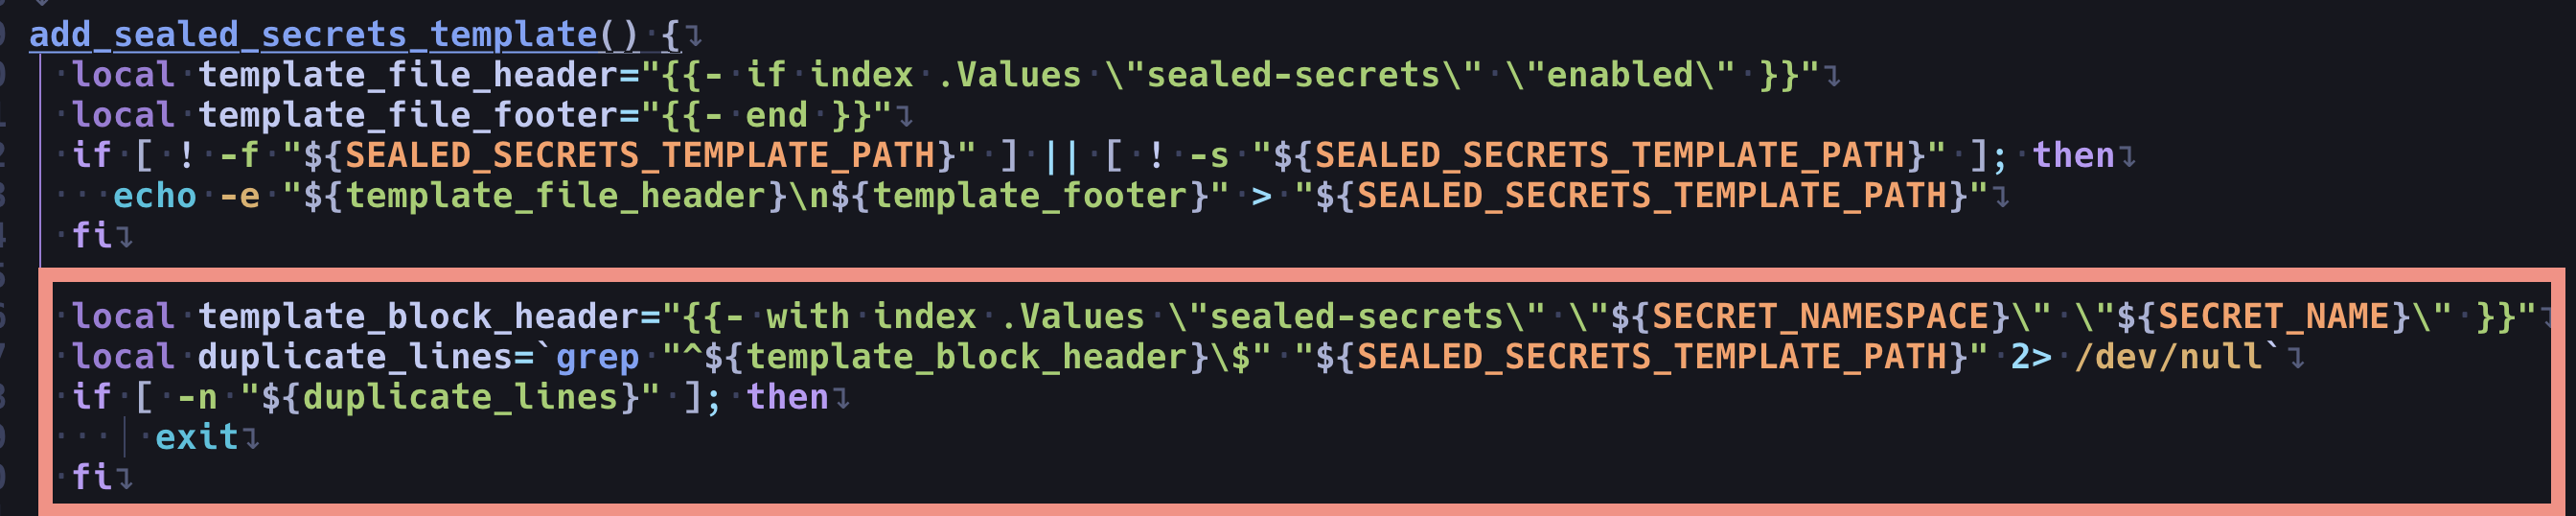 SealedSecretのテンプレートの重複をチェックする実装コード